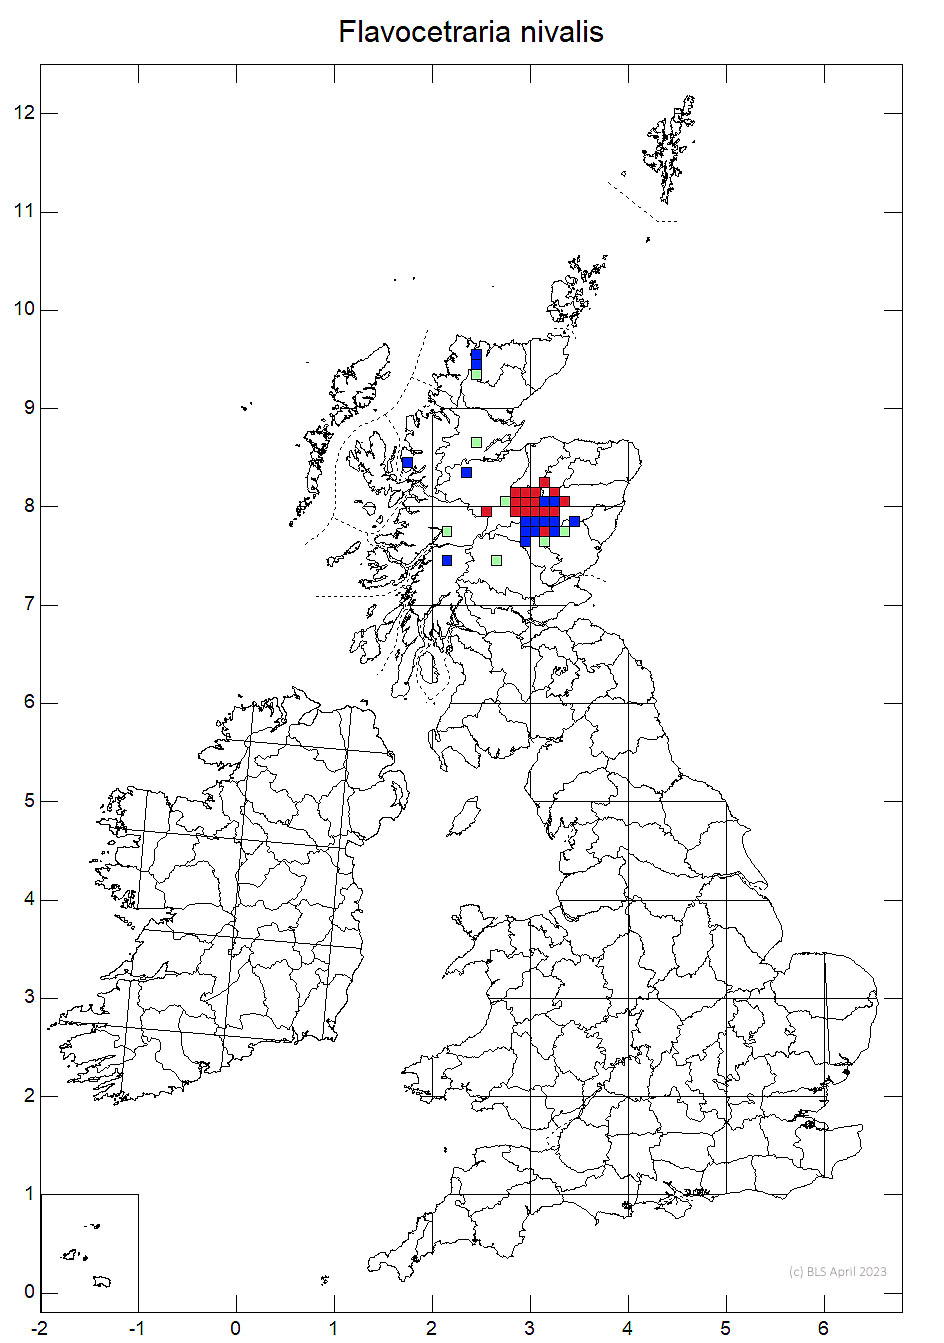 Flavocetraria nivalis 10km sq distribution map